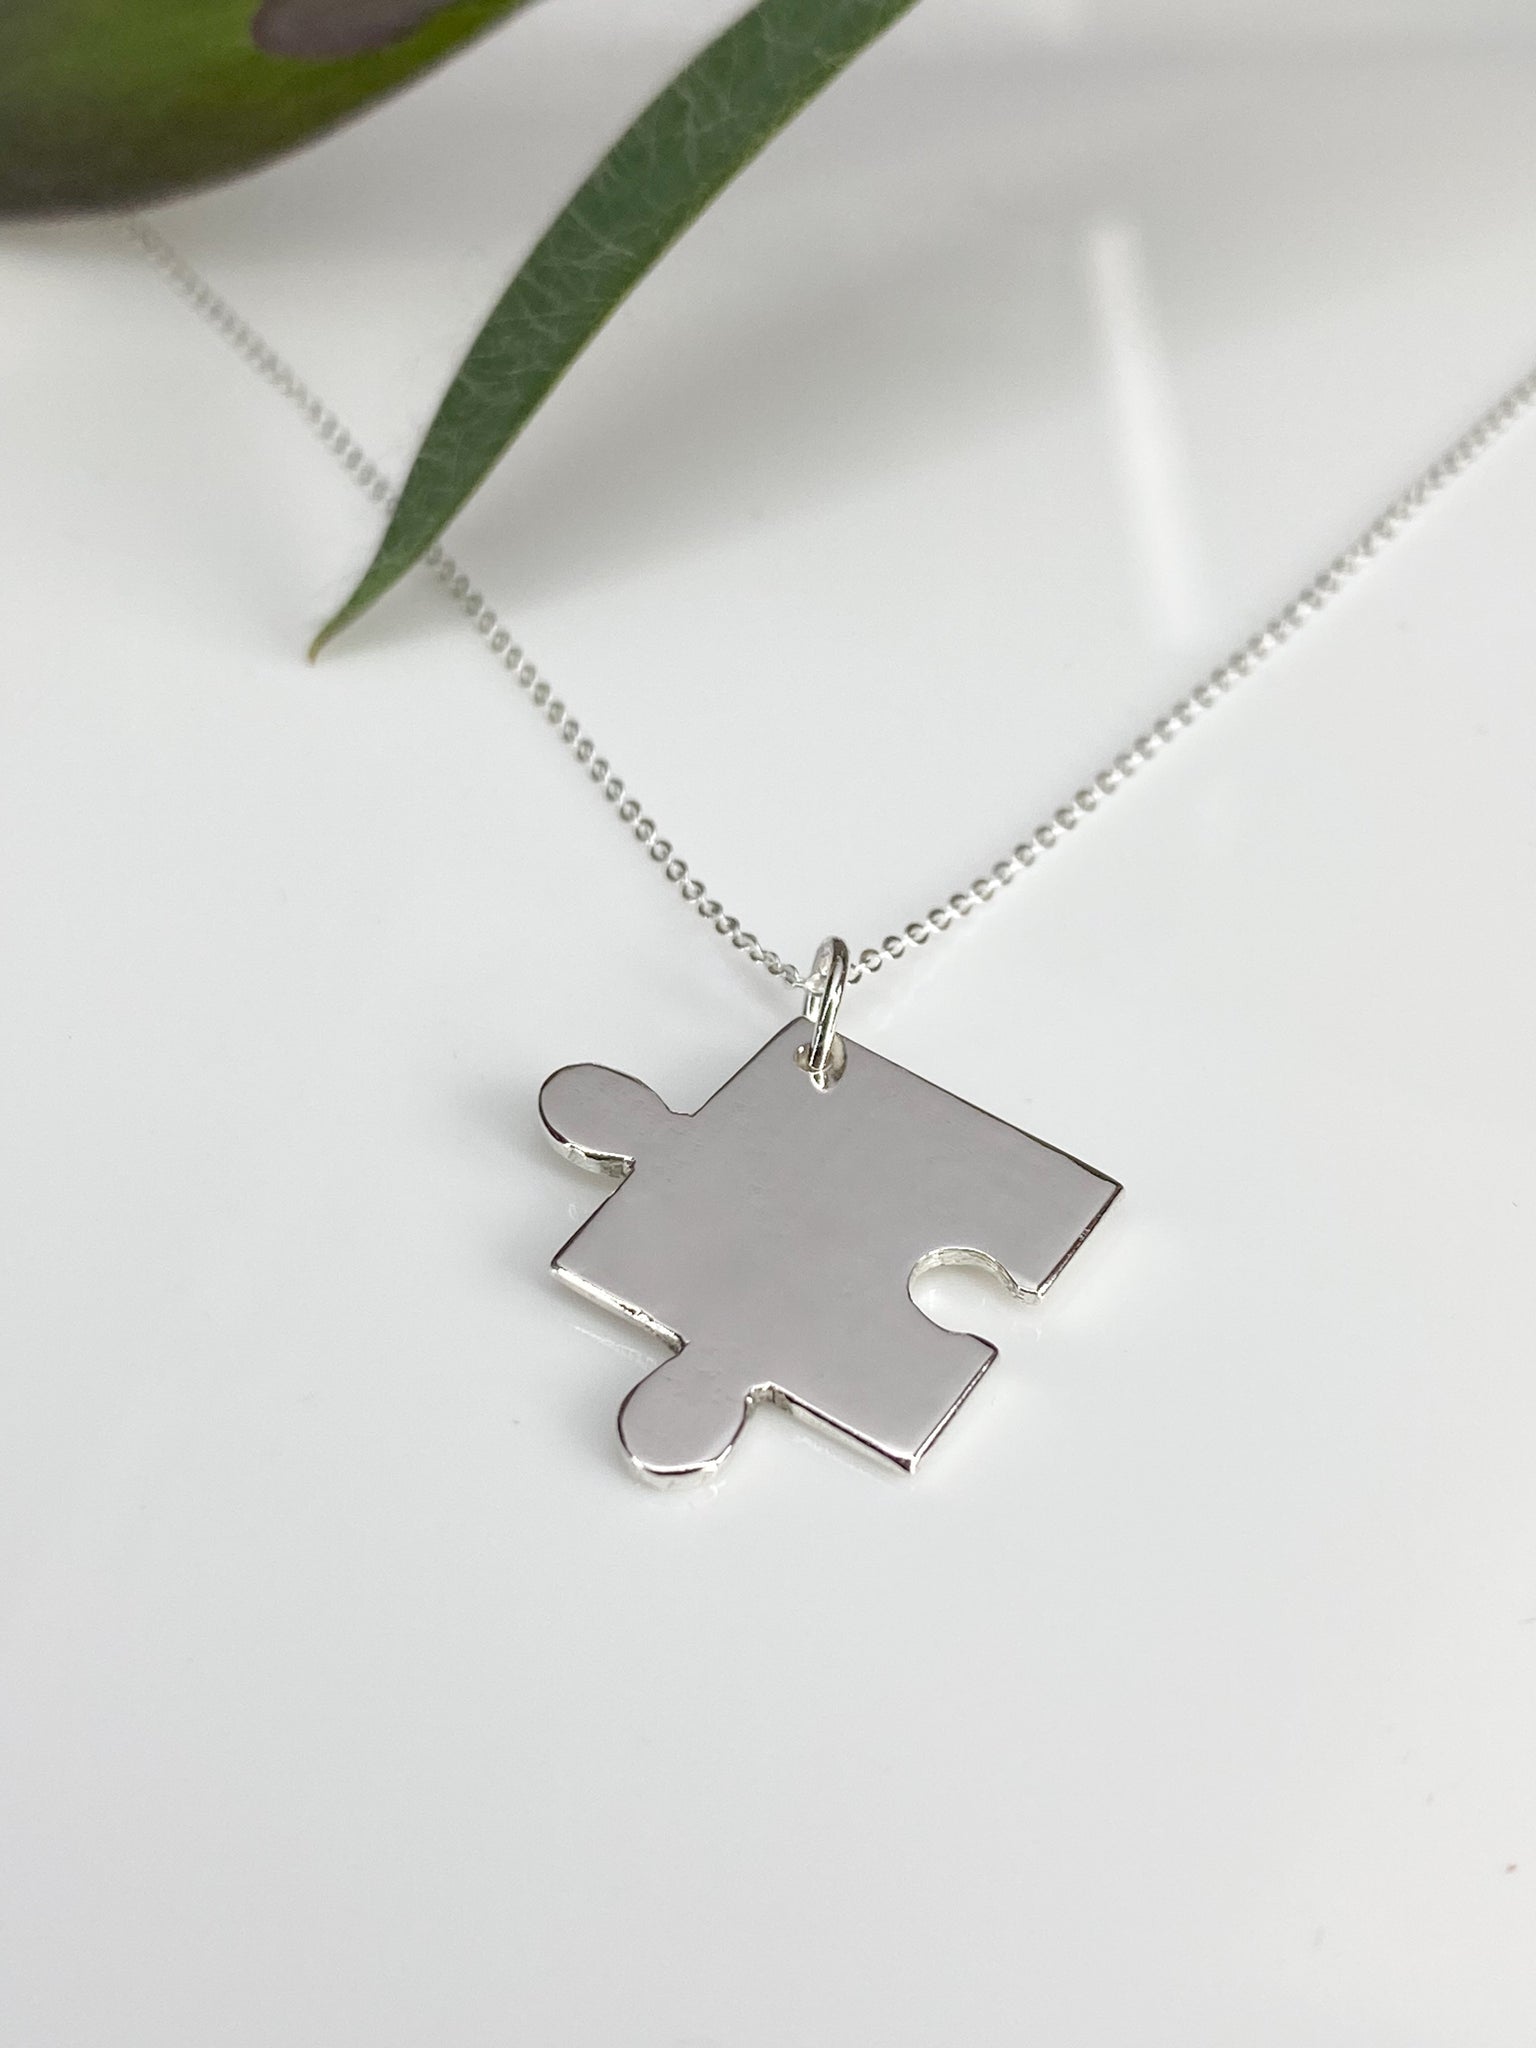 4Pcs Interlocking Jigsaw Puzzle Pendant Chain Necklace Family Best Friends  Gift